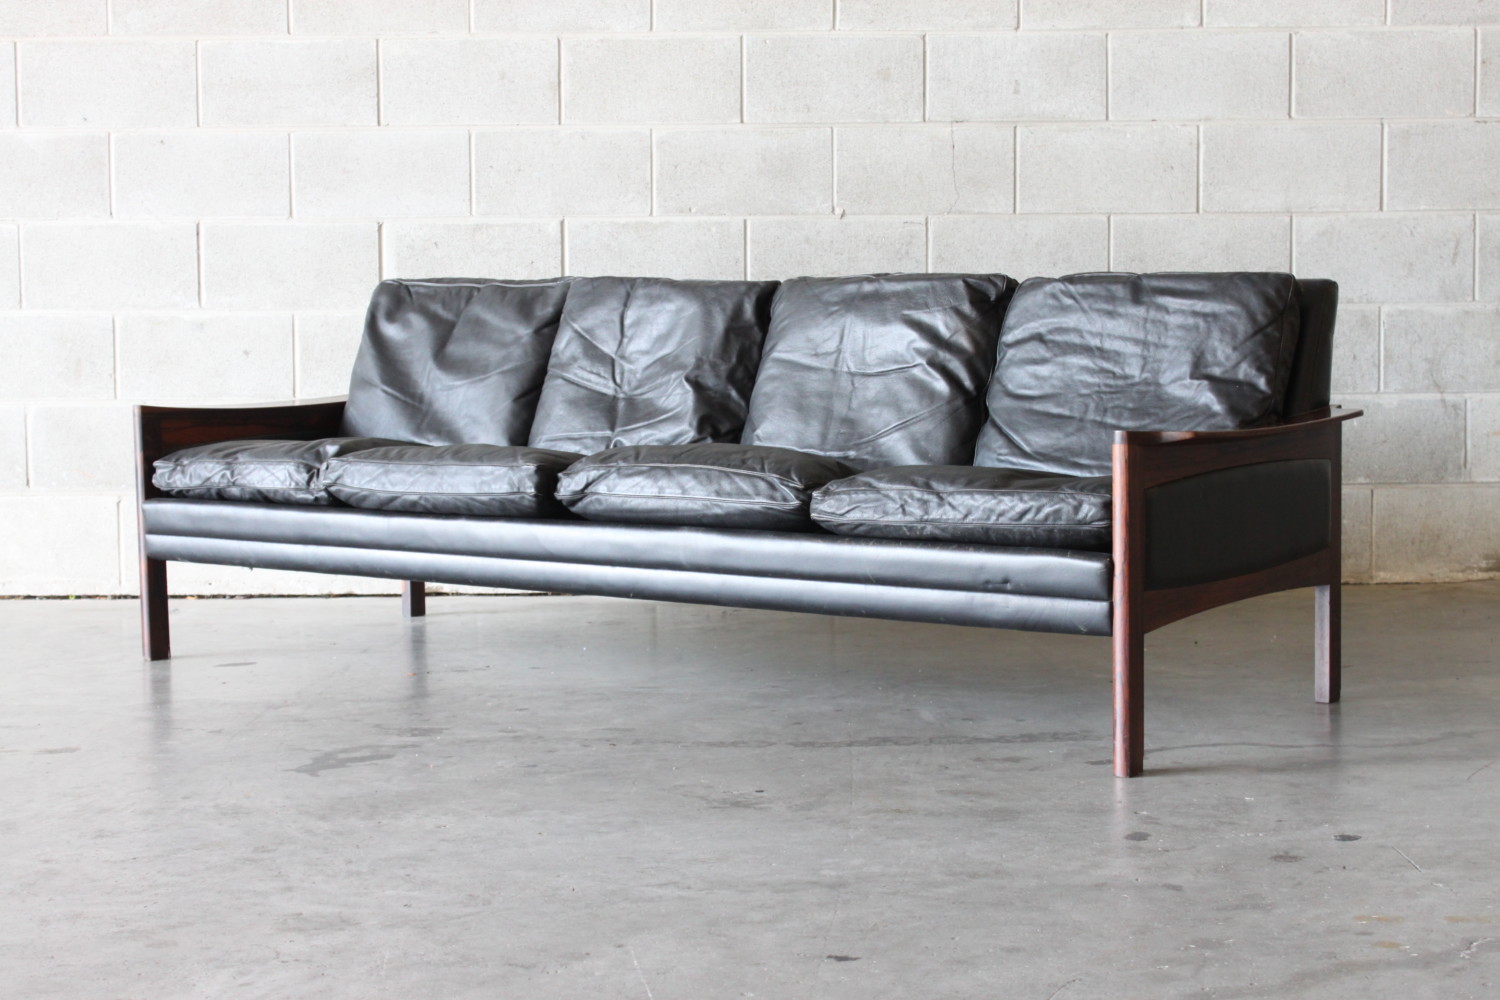 XL Leather Sofa